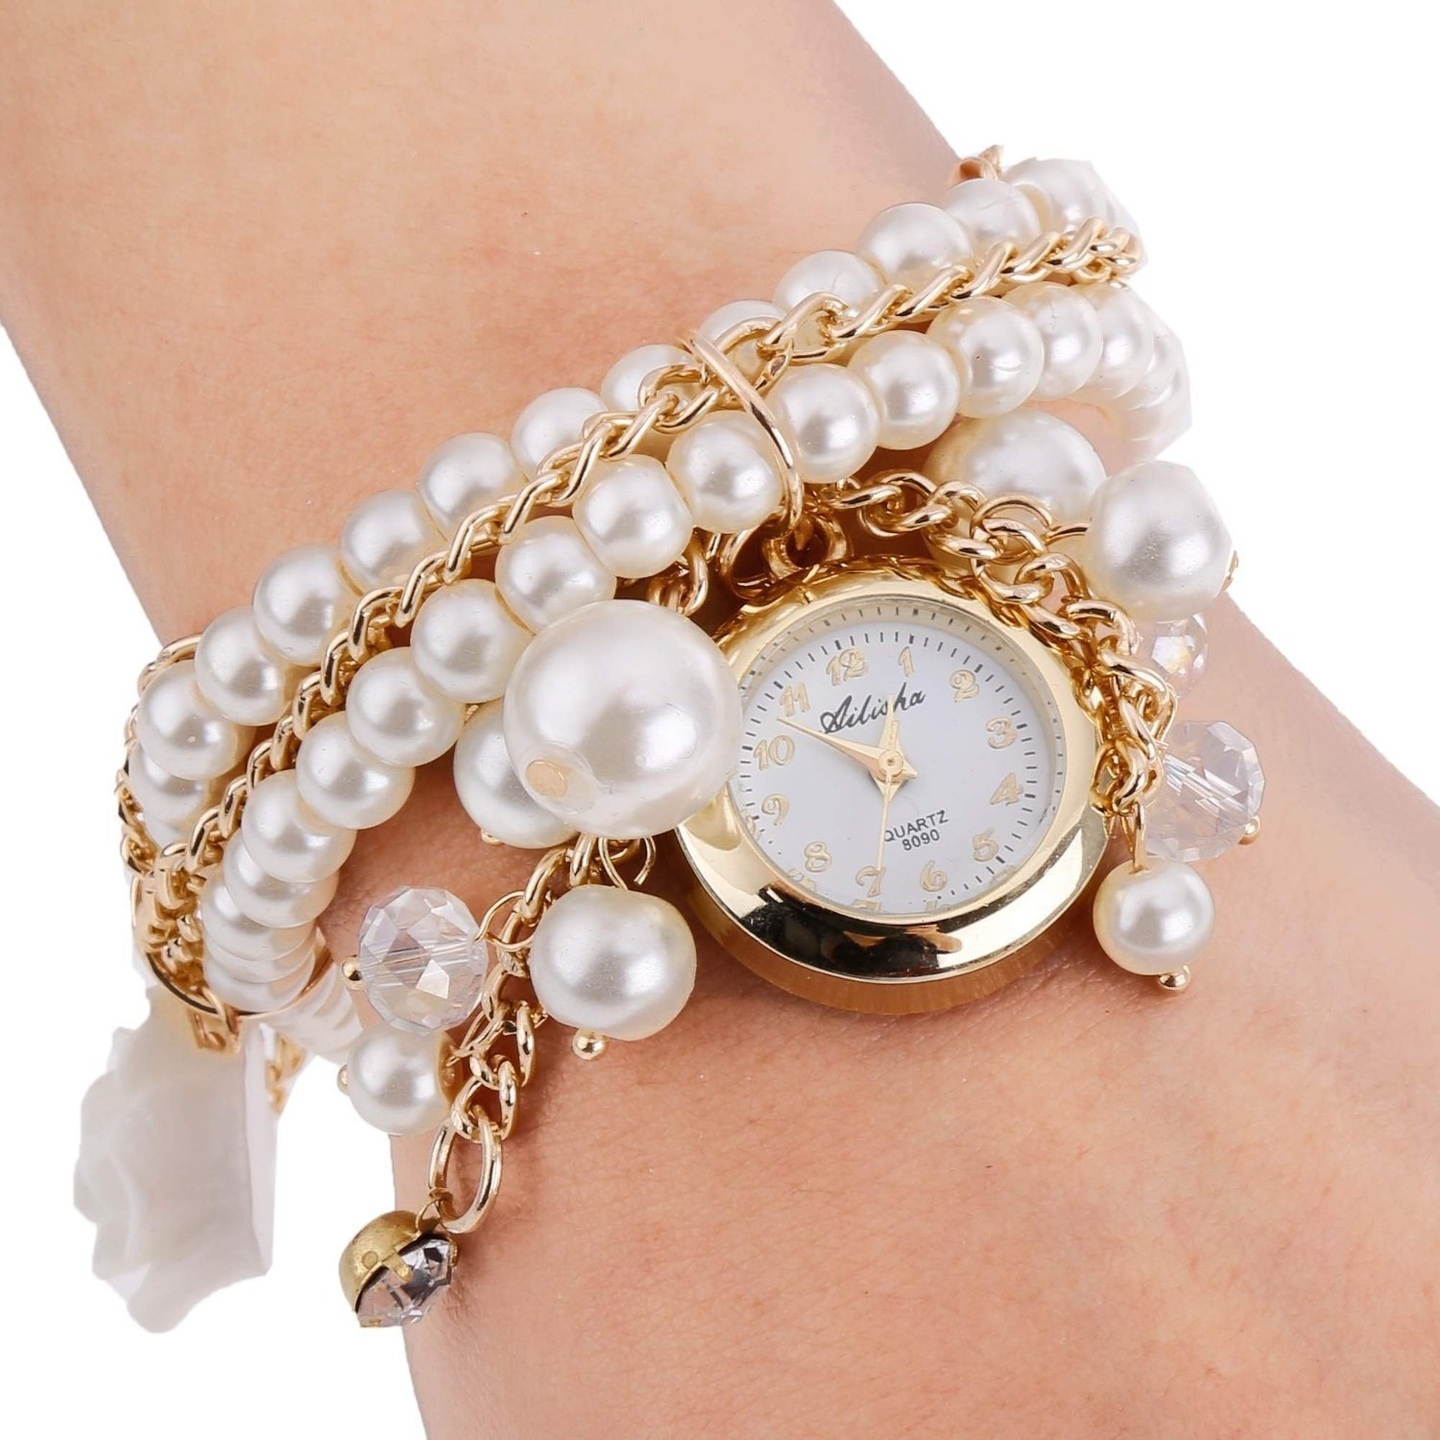 Ashiana stylish multi layer charm pearl bracelet style watch with White rose